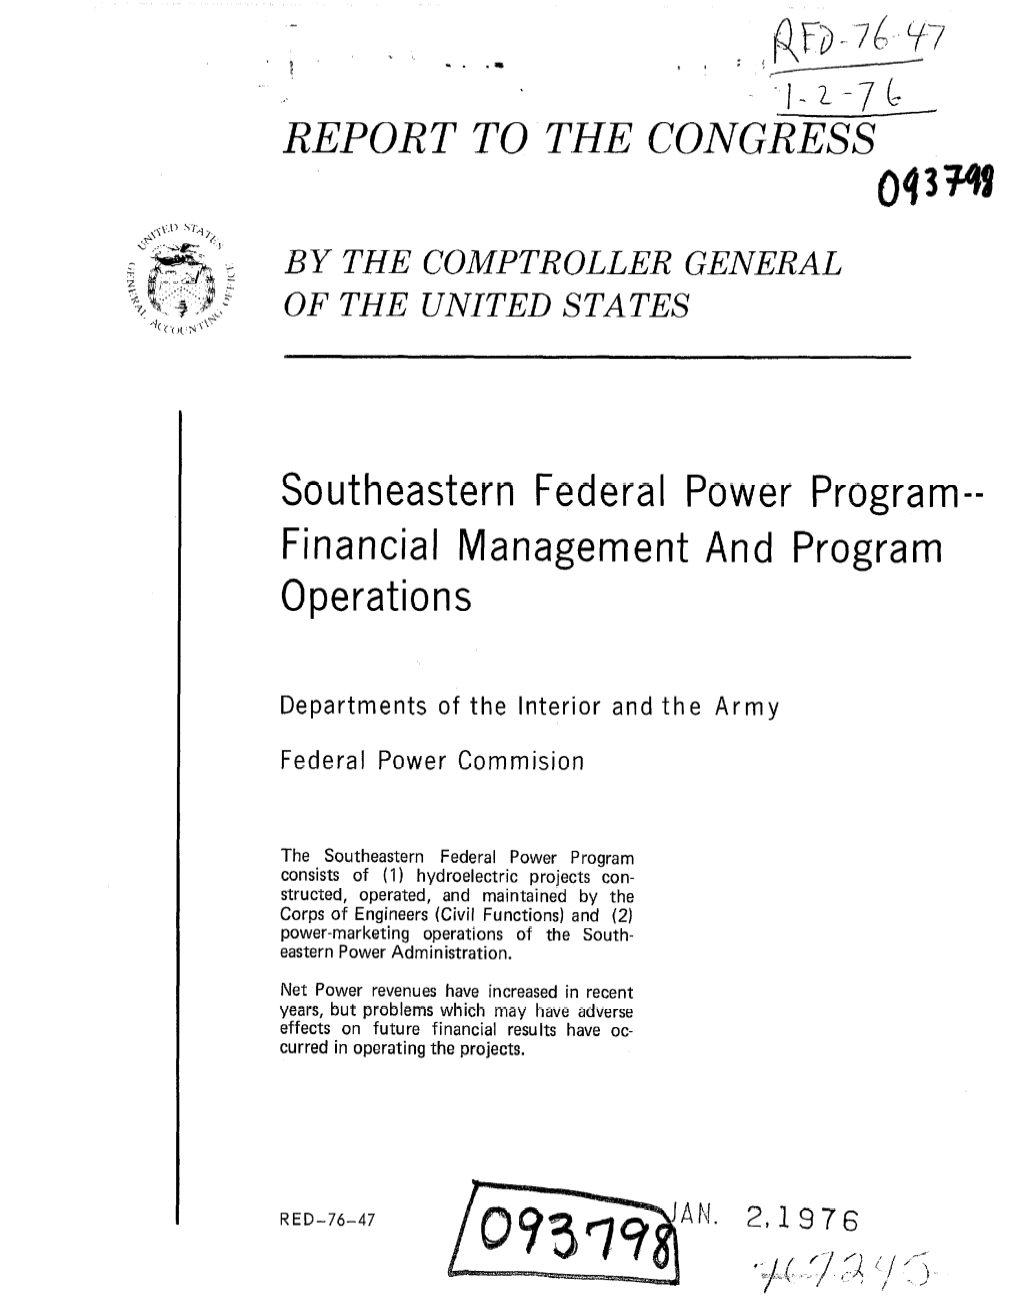 RED-76-47 Southeastern Federal Power Program